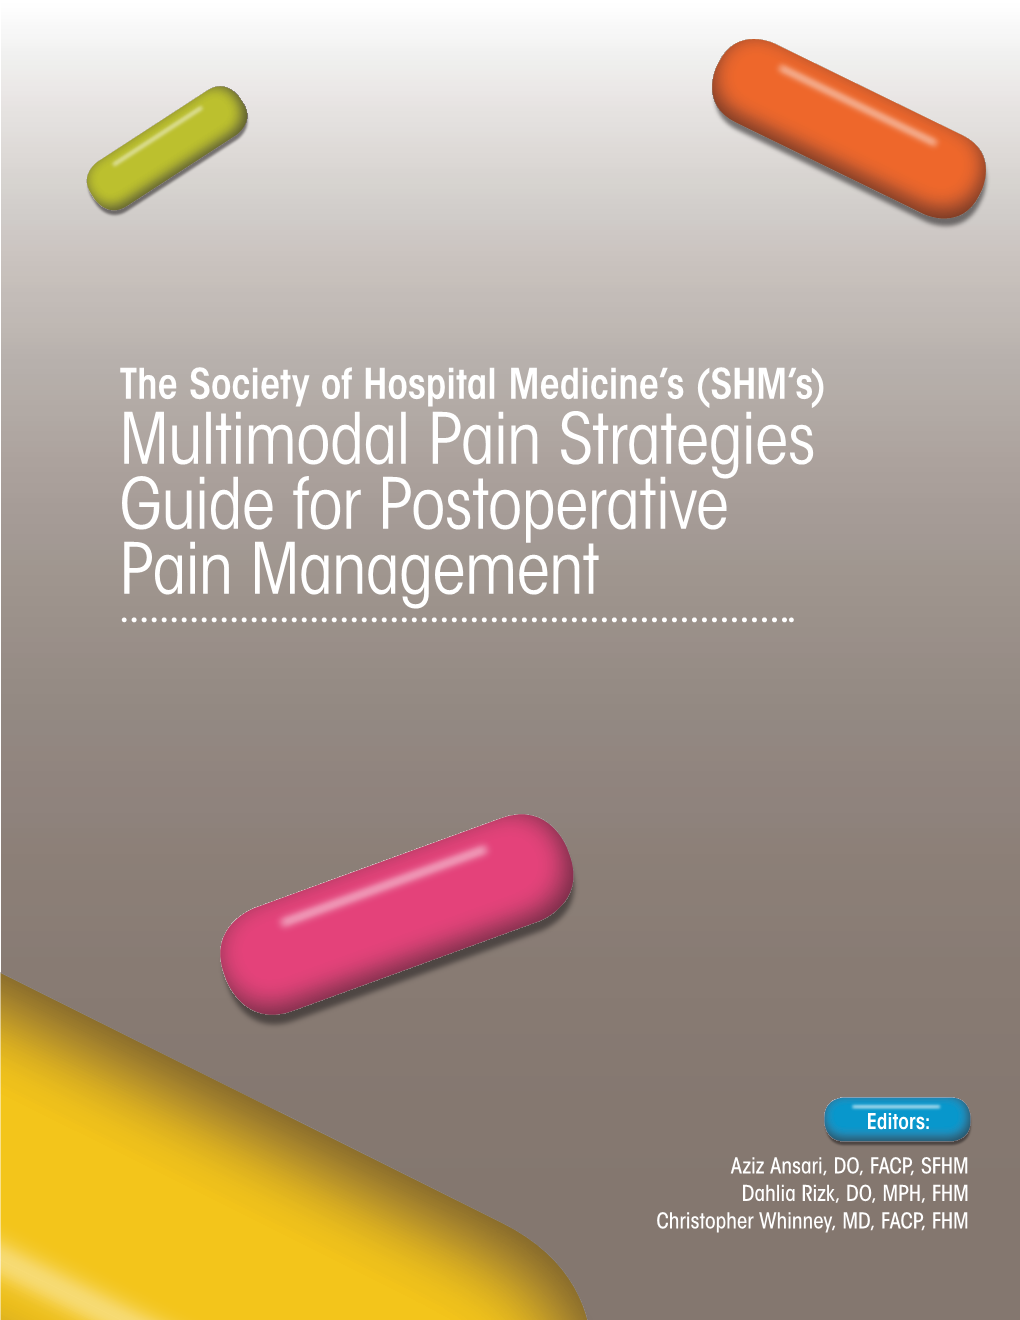 SHM's Multimodal Pain Strategies Guide for Postoperative Pain Management